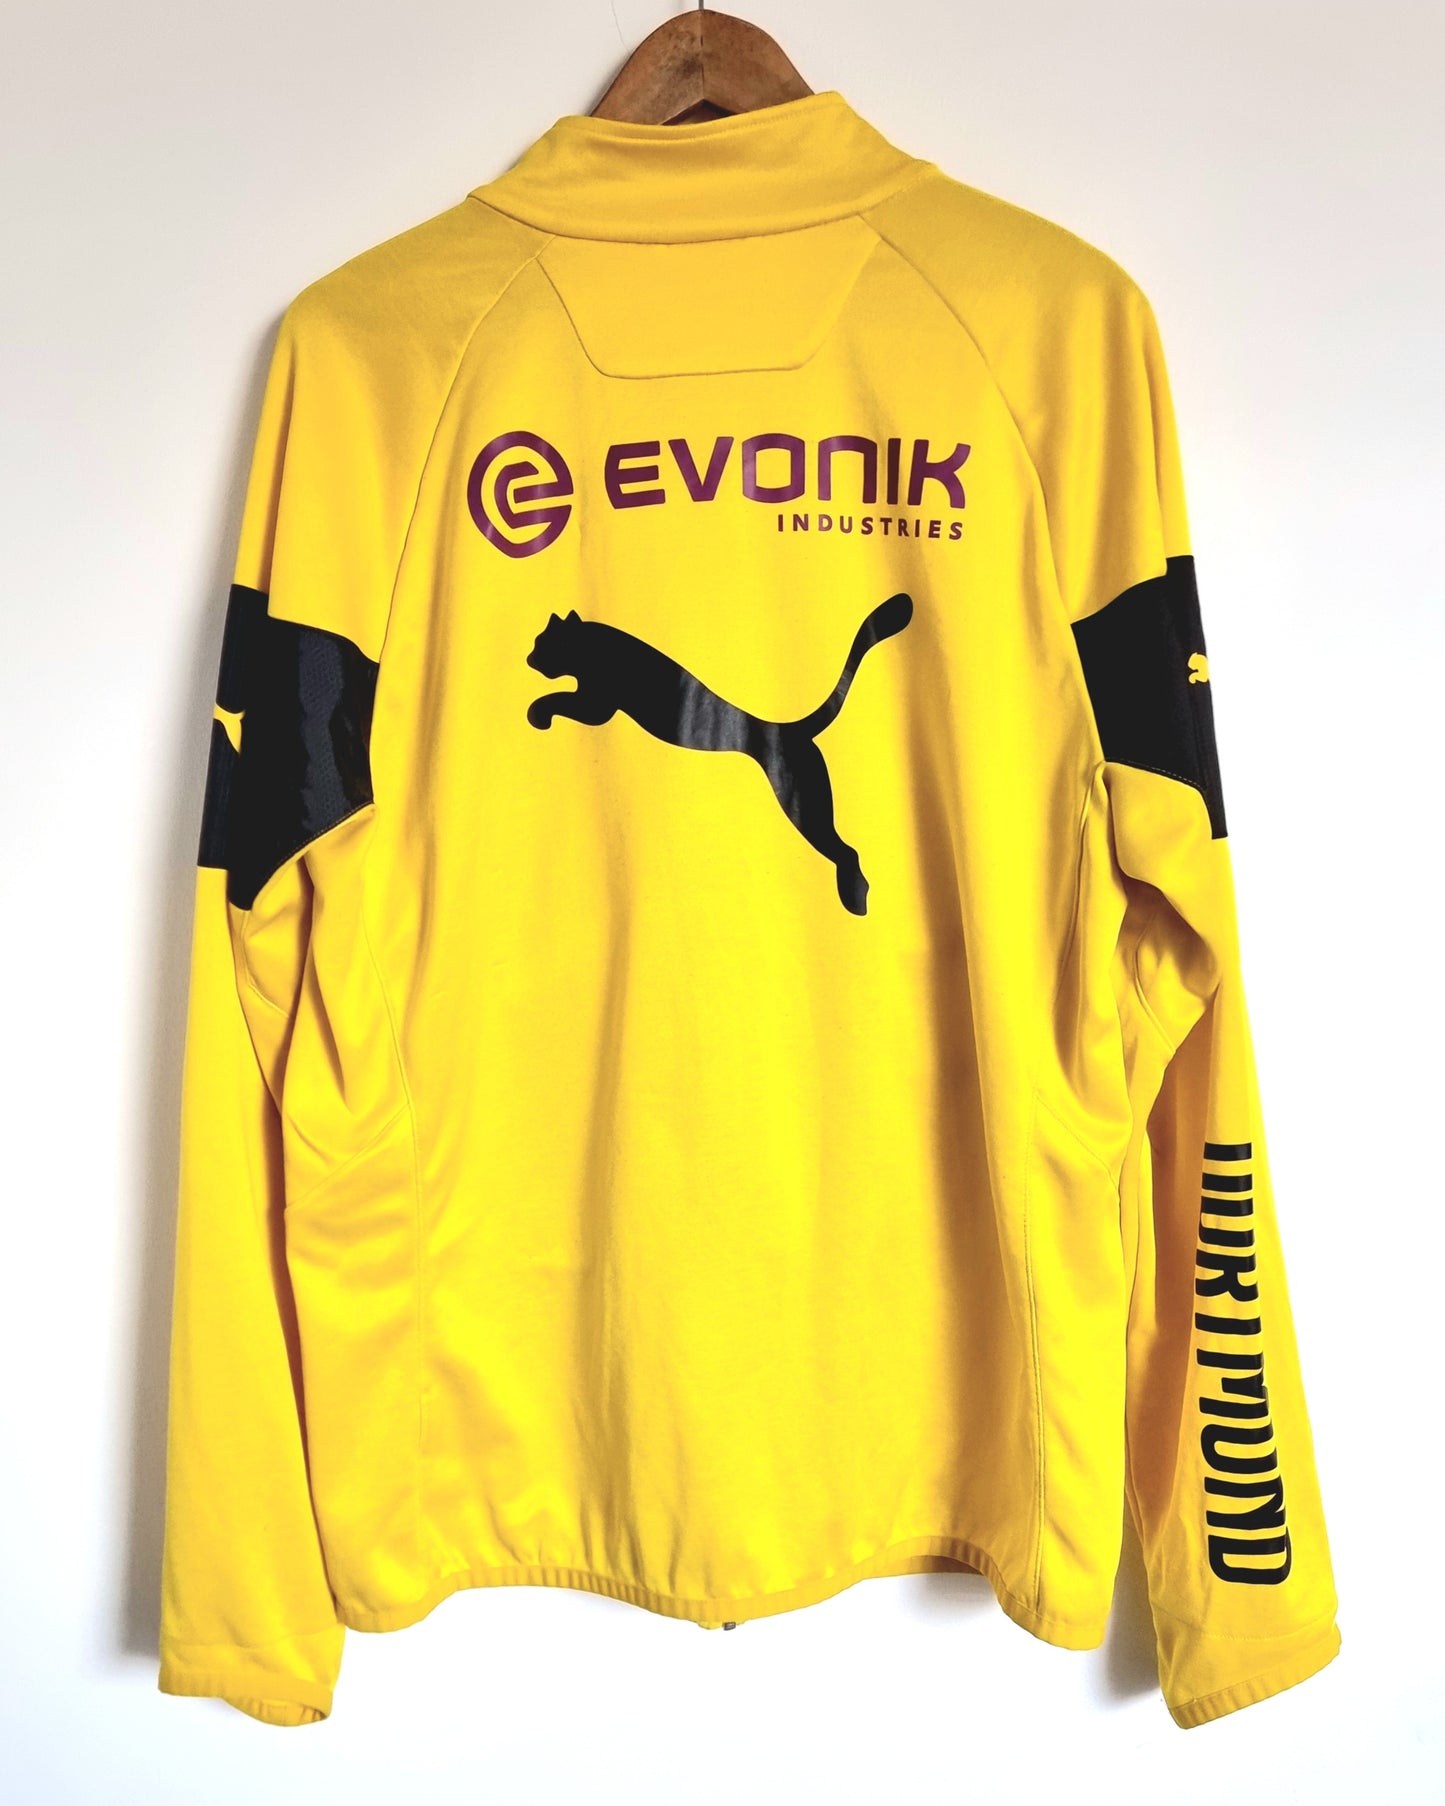 Puma Borussia Dortmund 14/15 Training Jacket XL